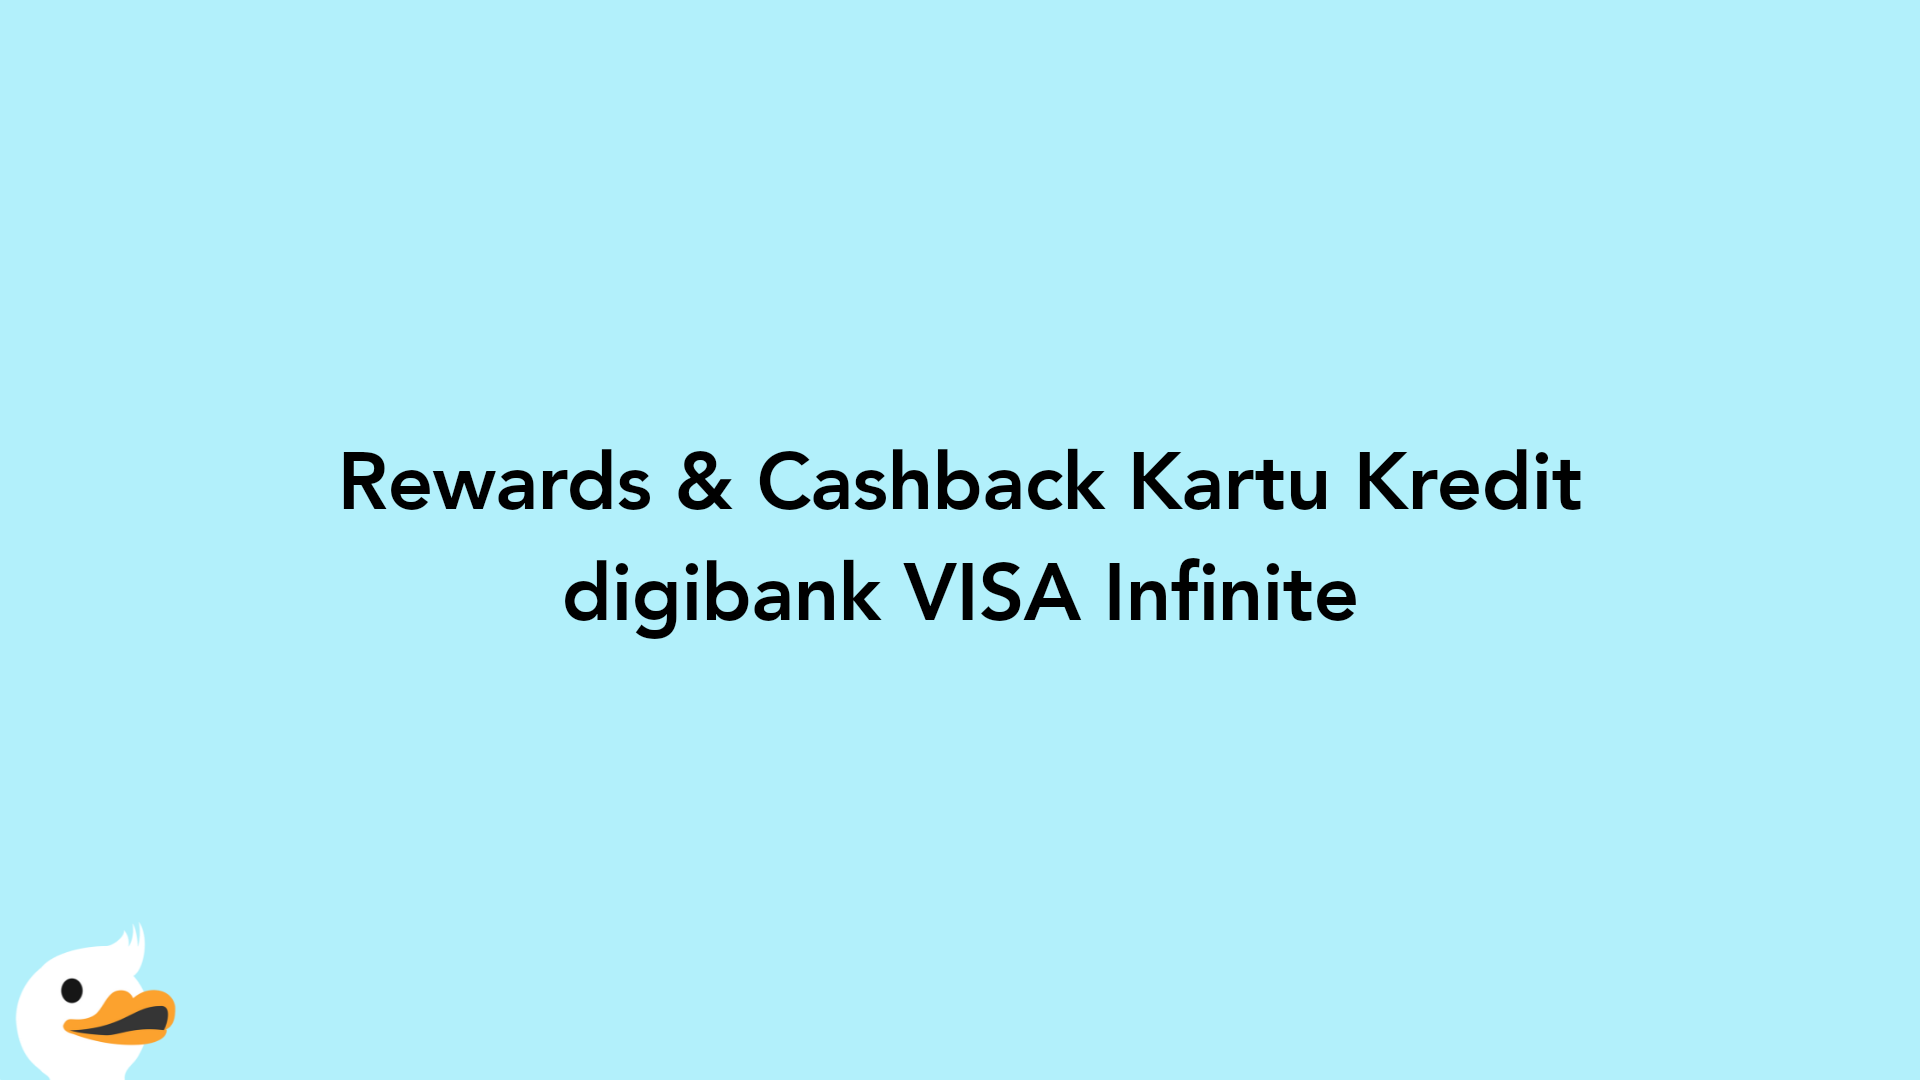 Rewards & Cashback Kartu Kredit digibank VISA Infinite